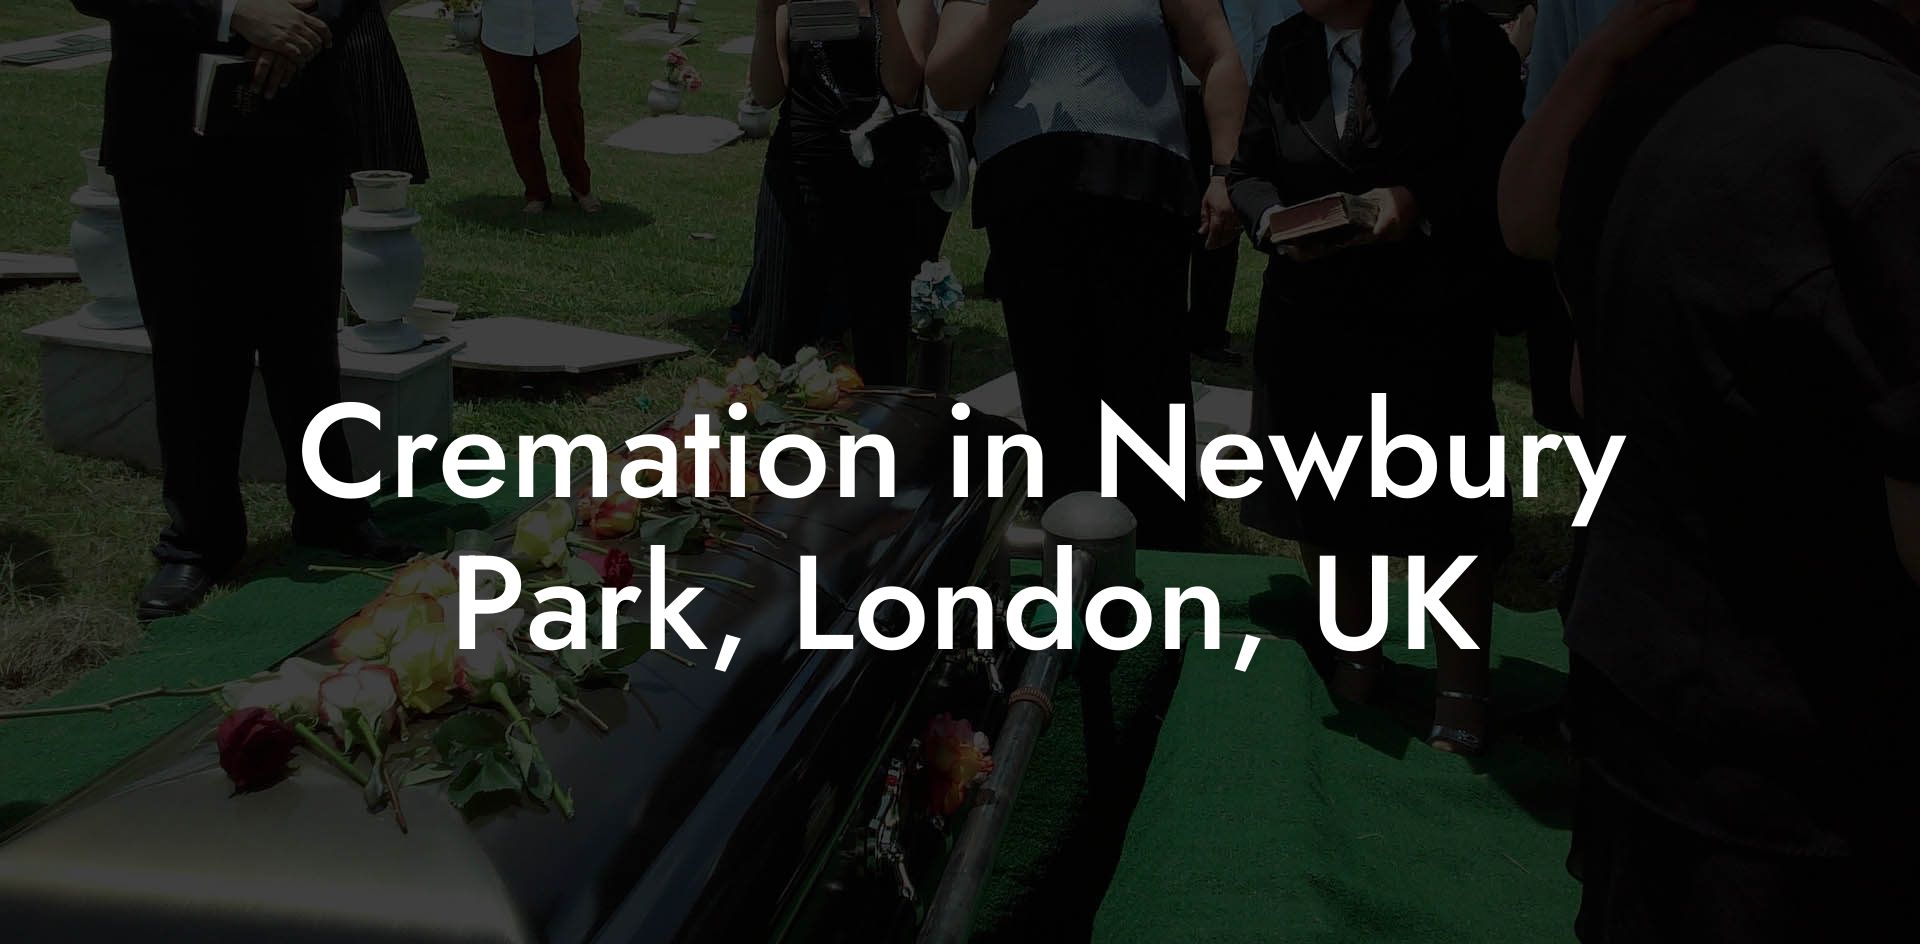 Cremation in Newbury Park, London, UK